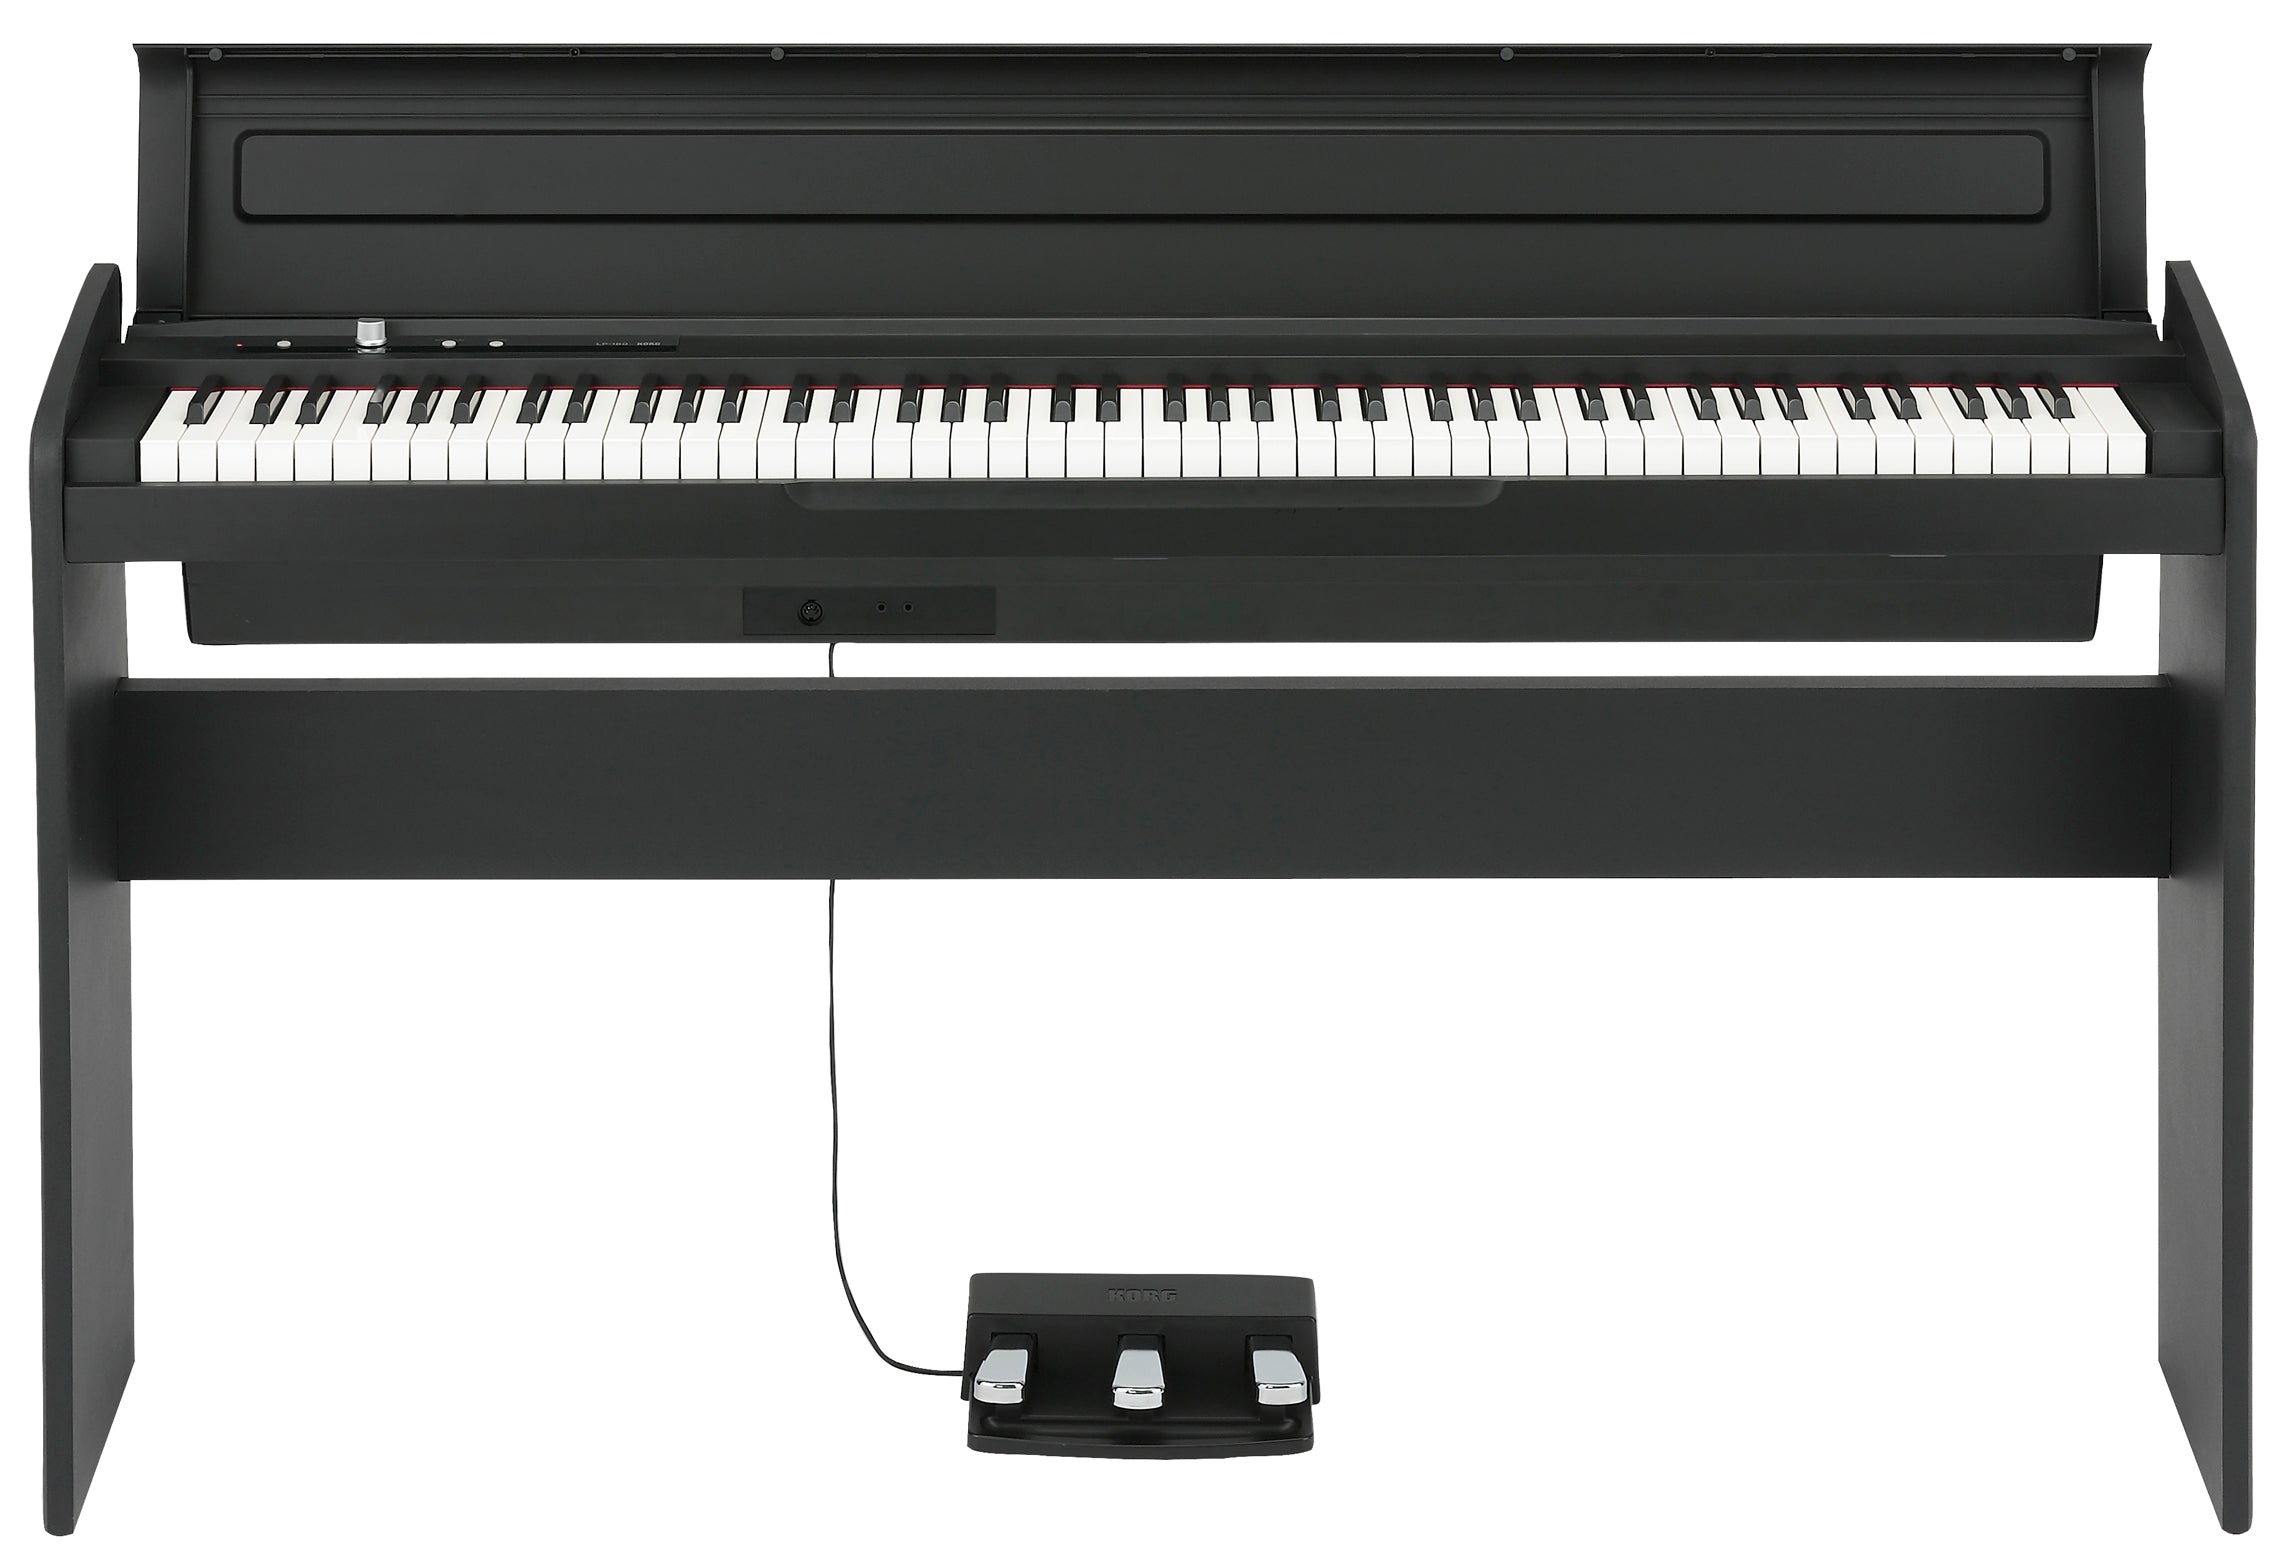 LP-180 Digital Piano - Black KORG USA Official Store